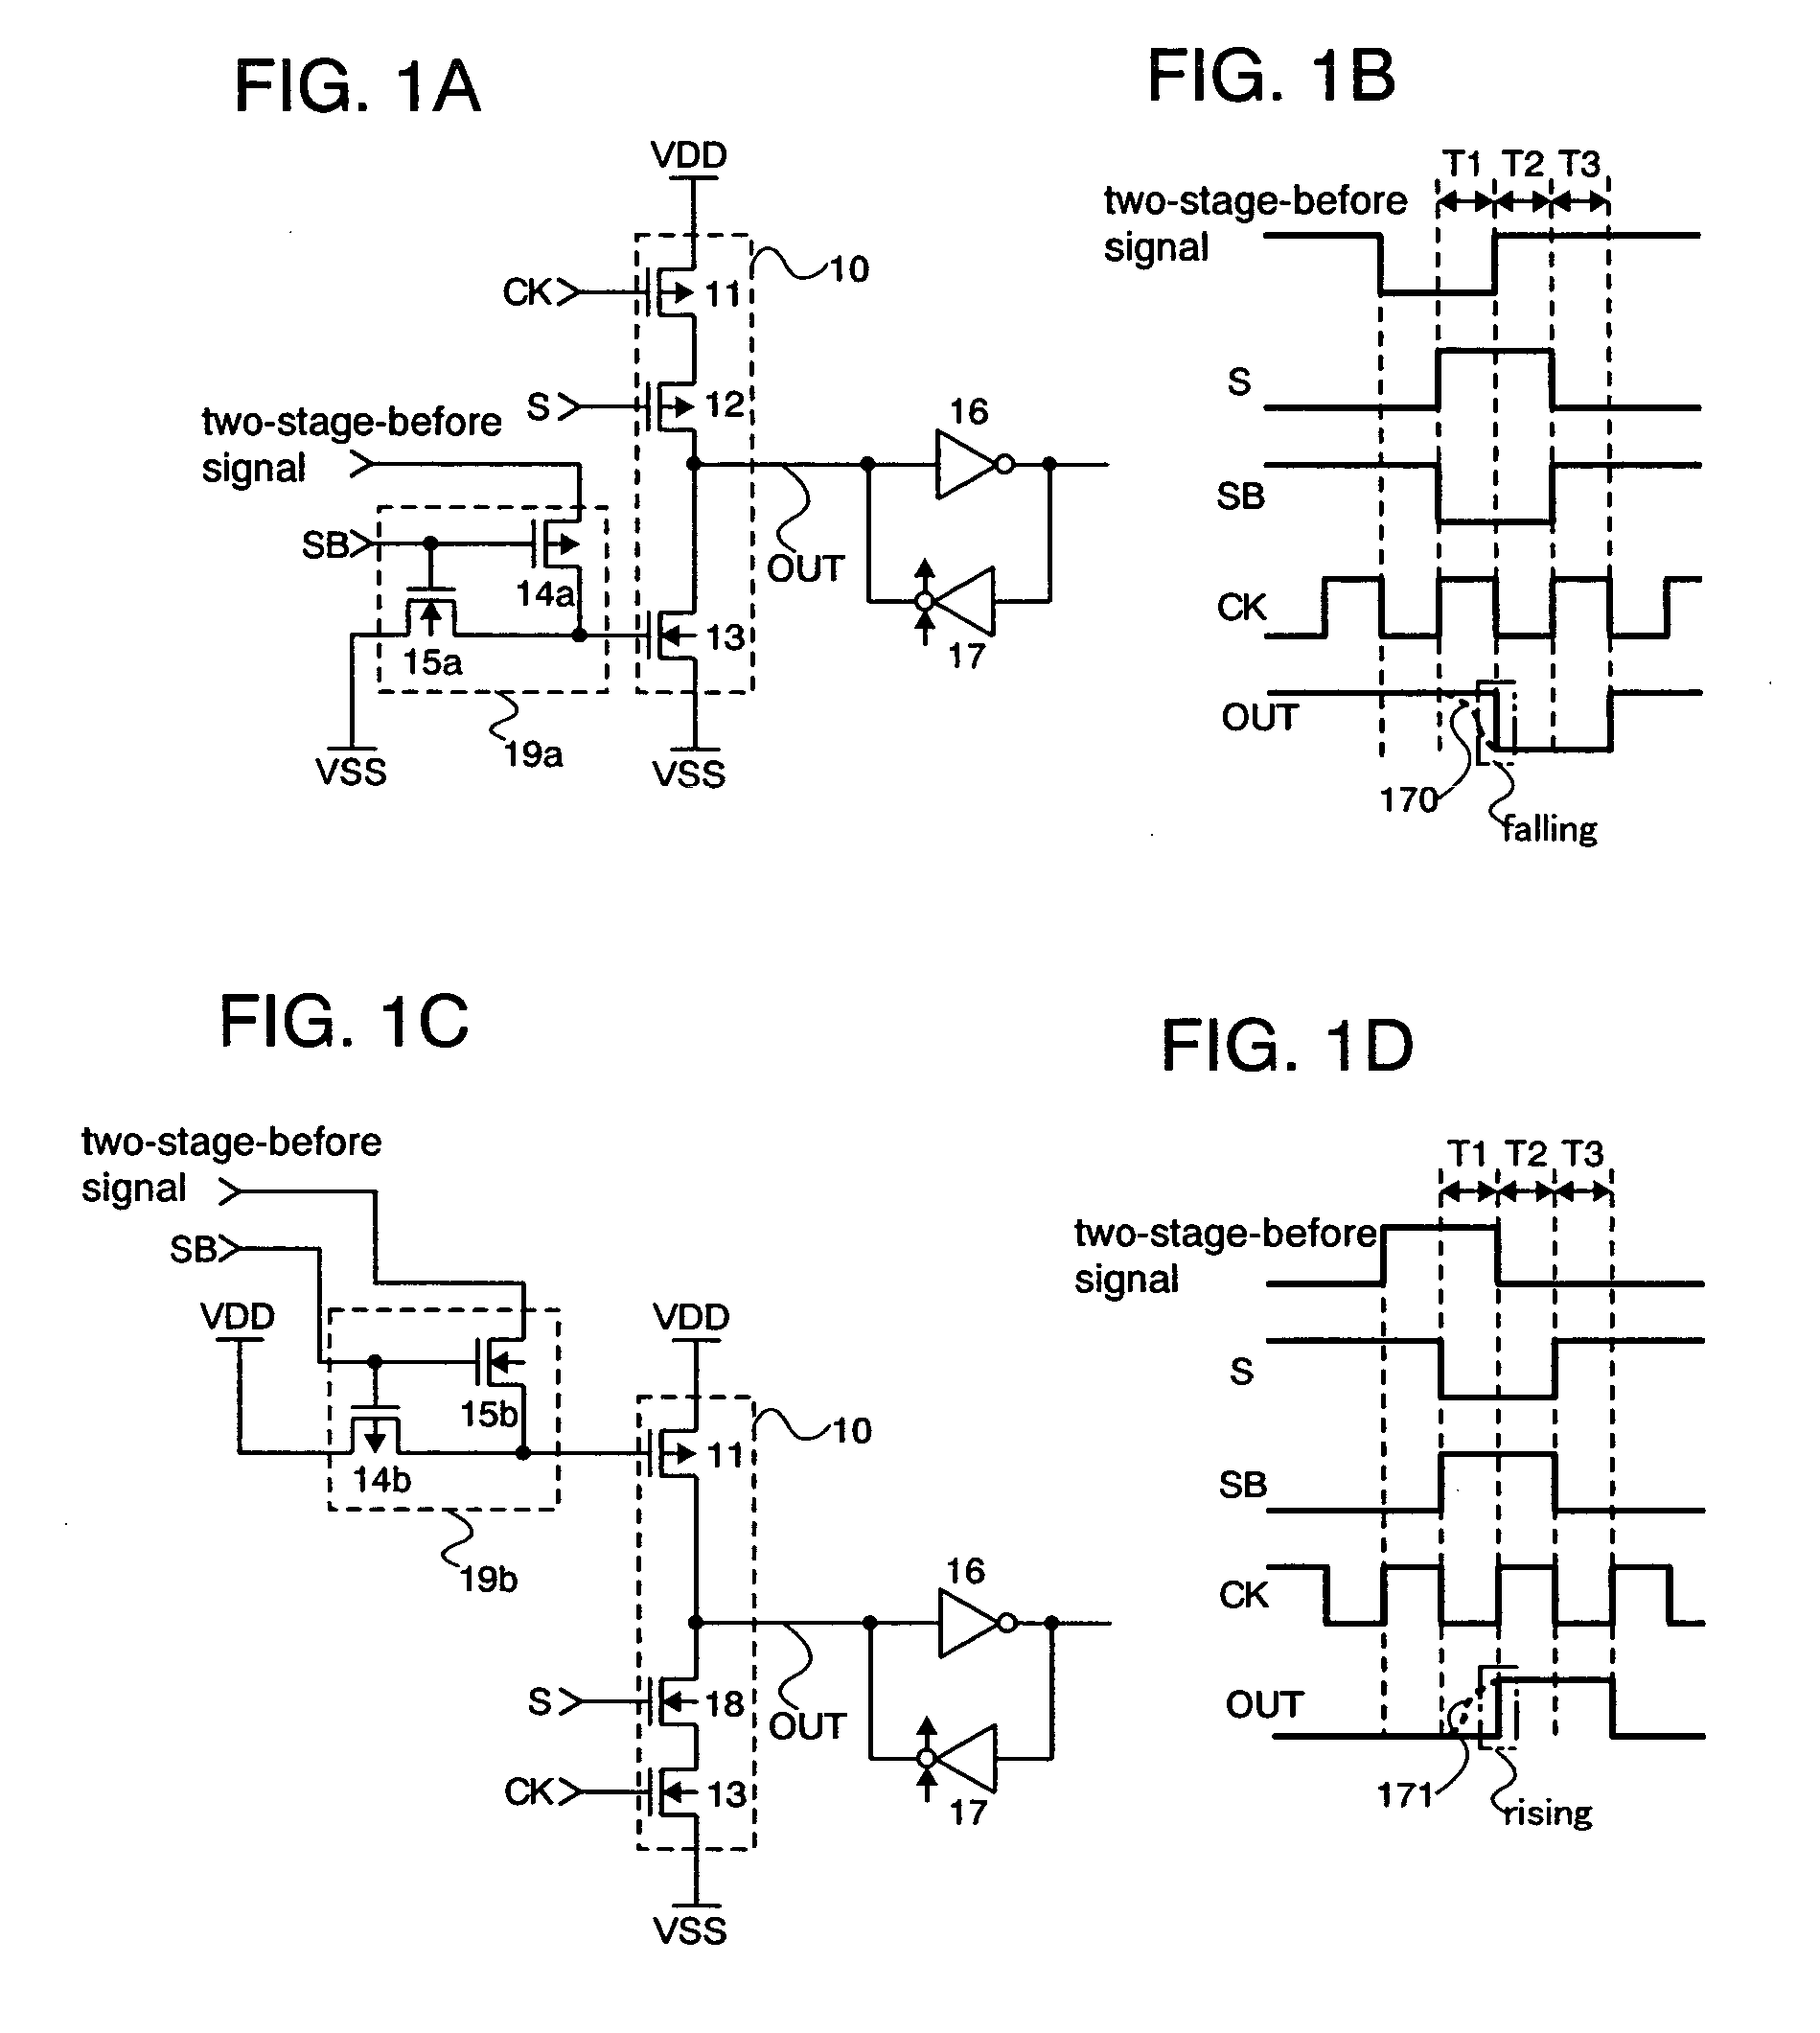 Clocked inverter, nand, nor and shift register